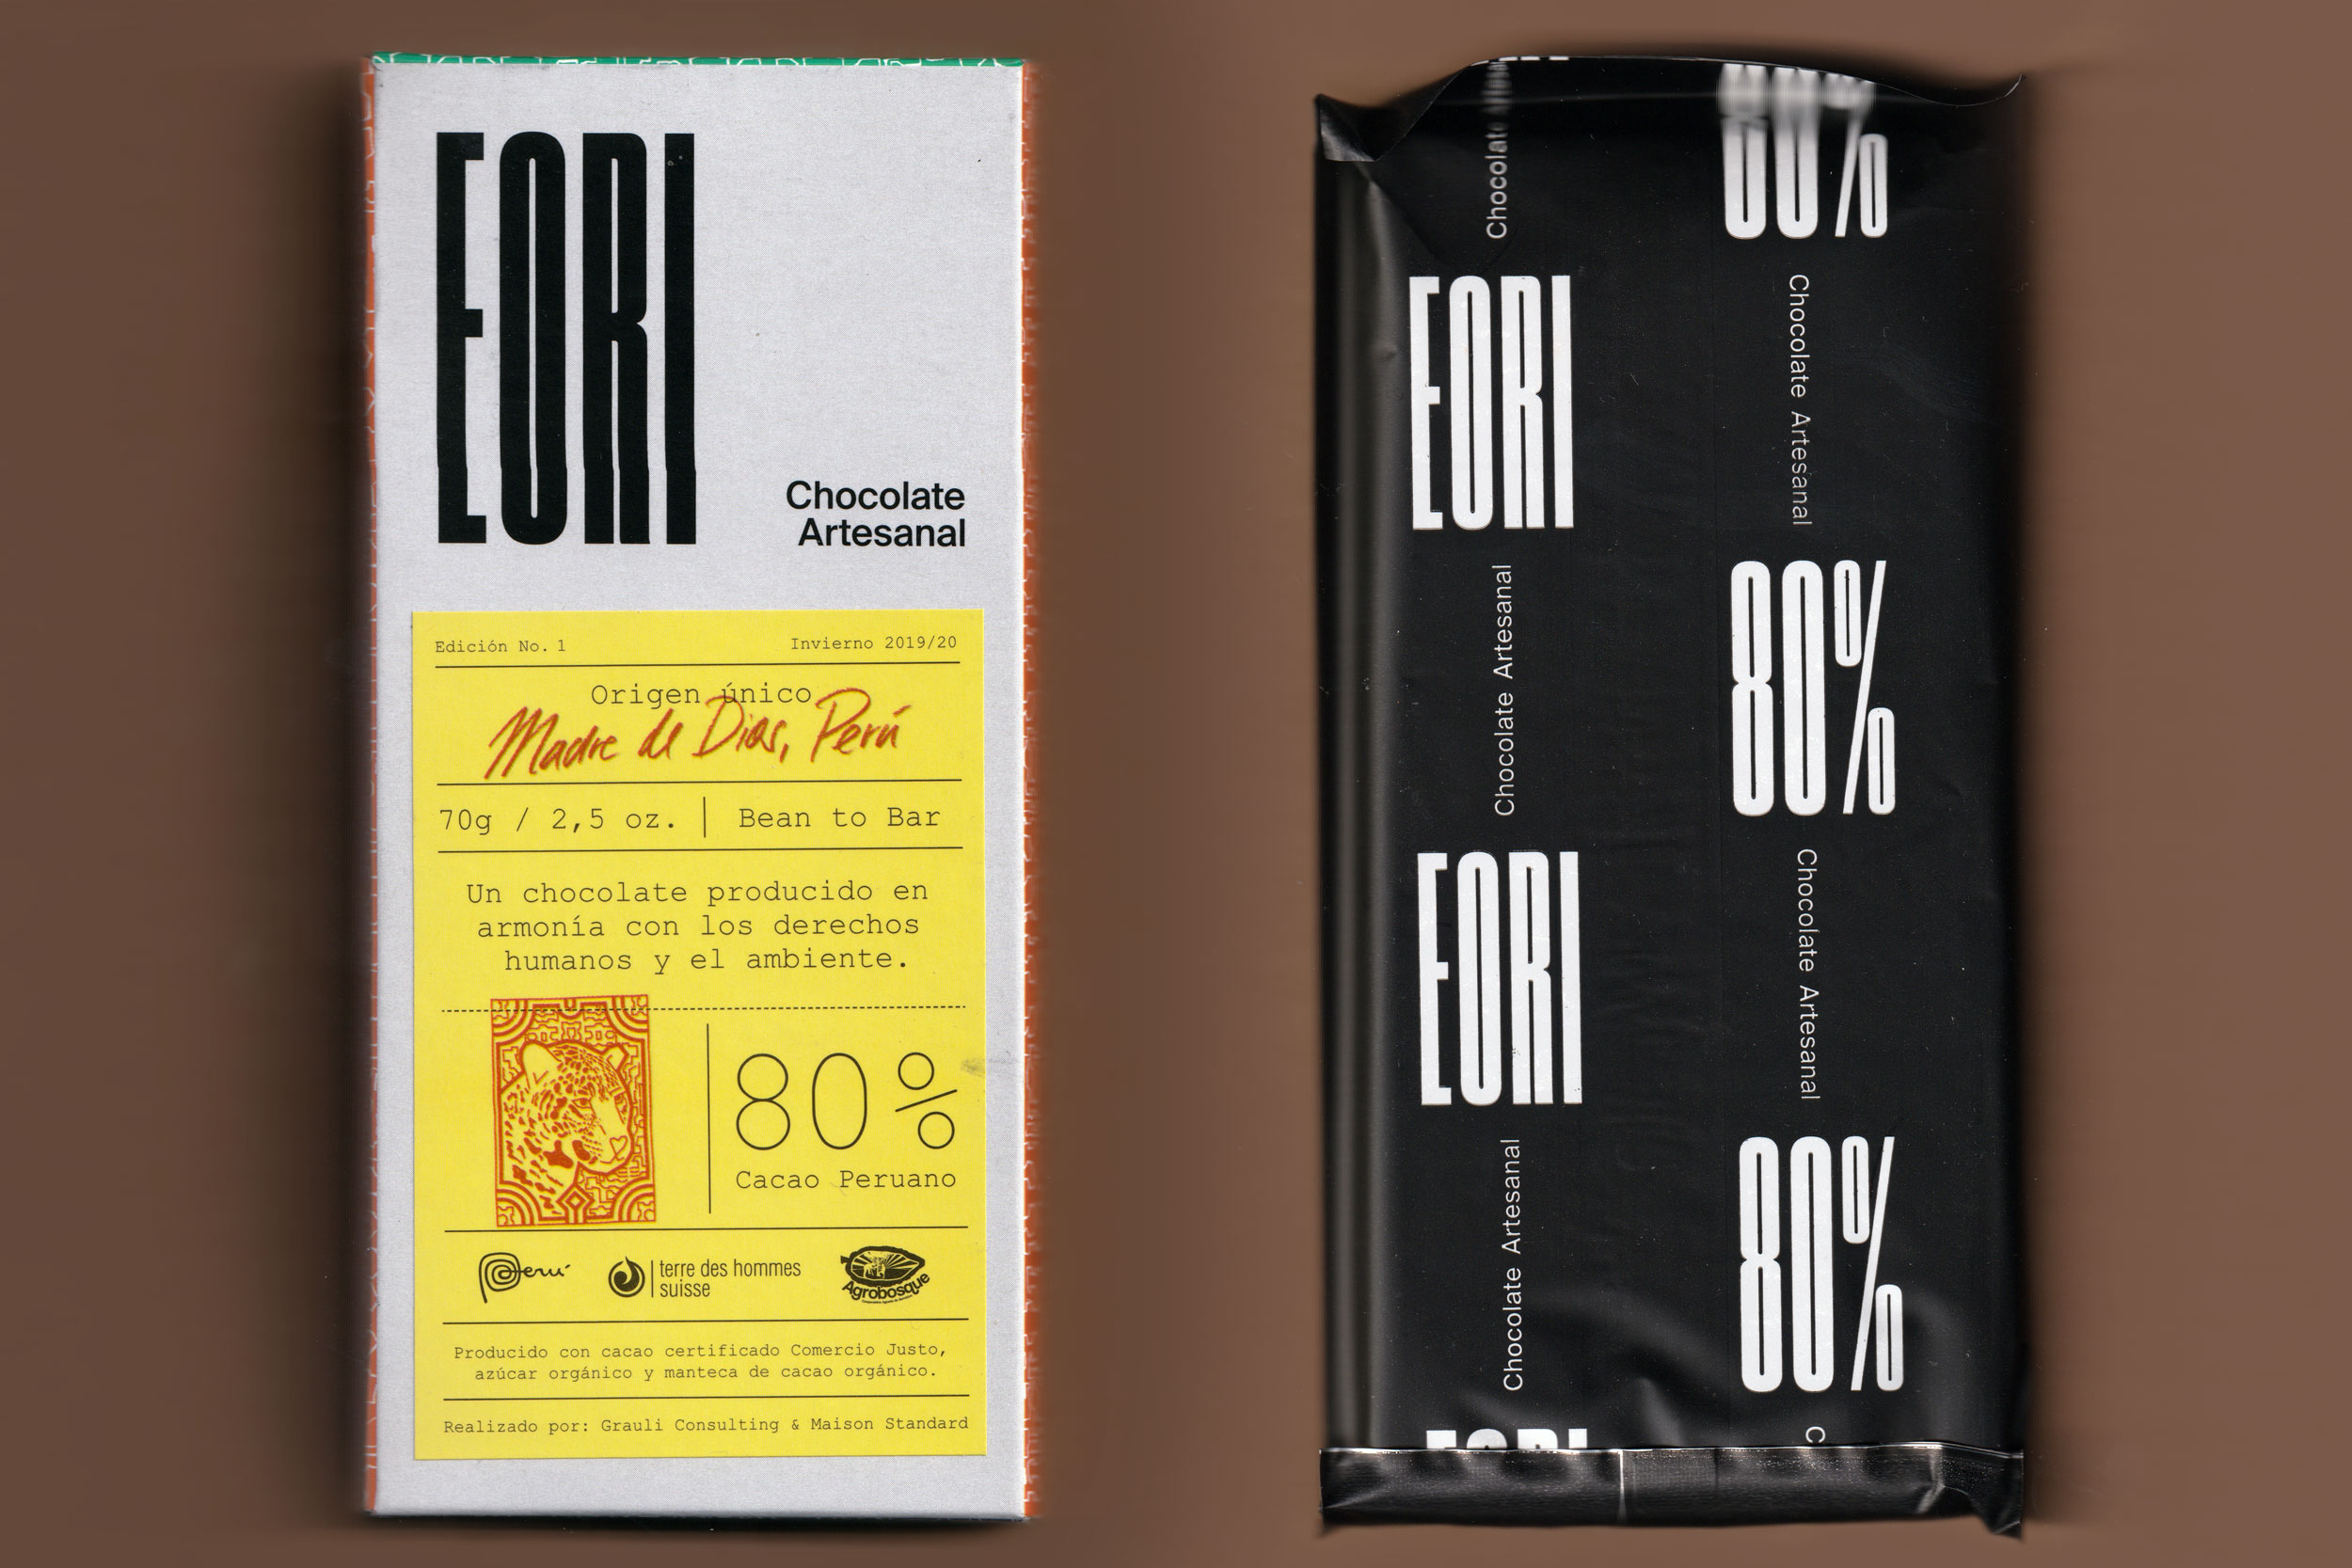 Die EORI Schokolade Edition Nr. 1